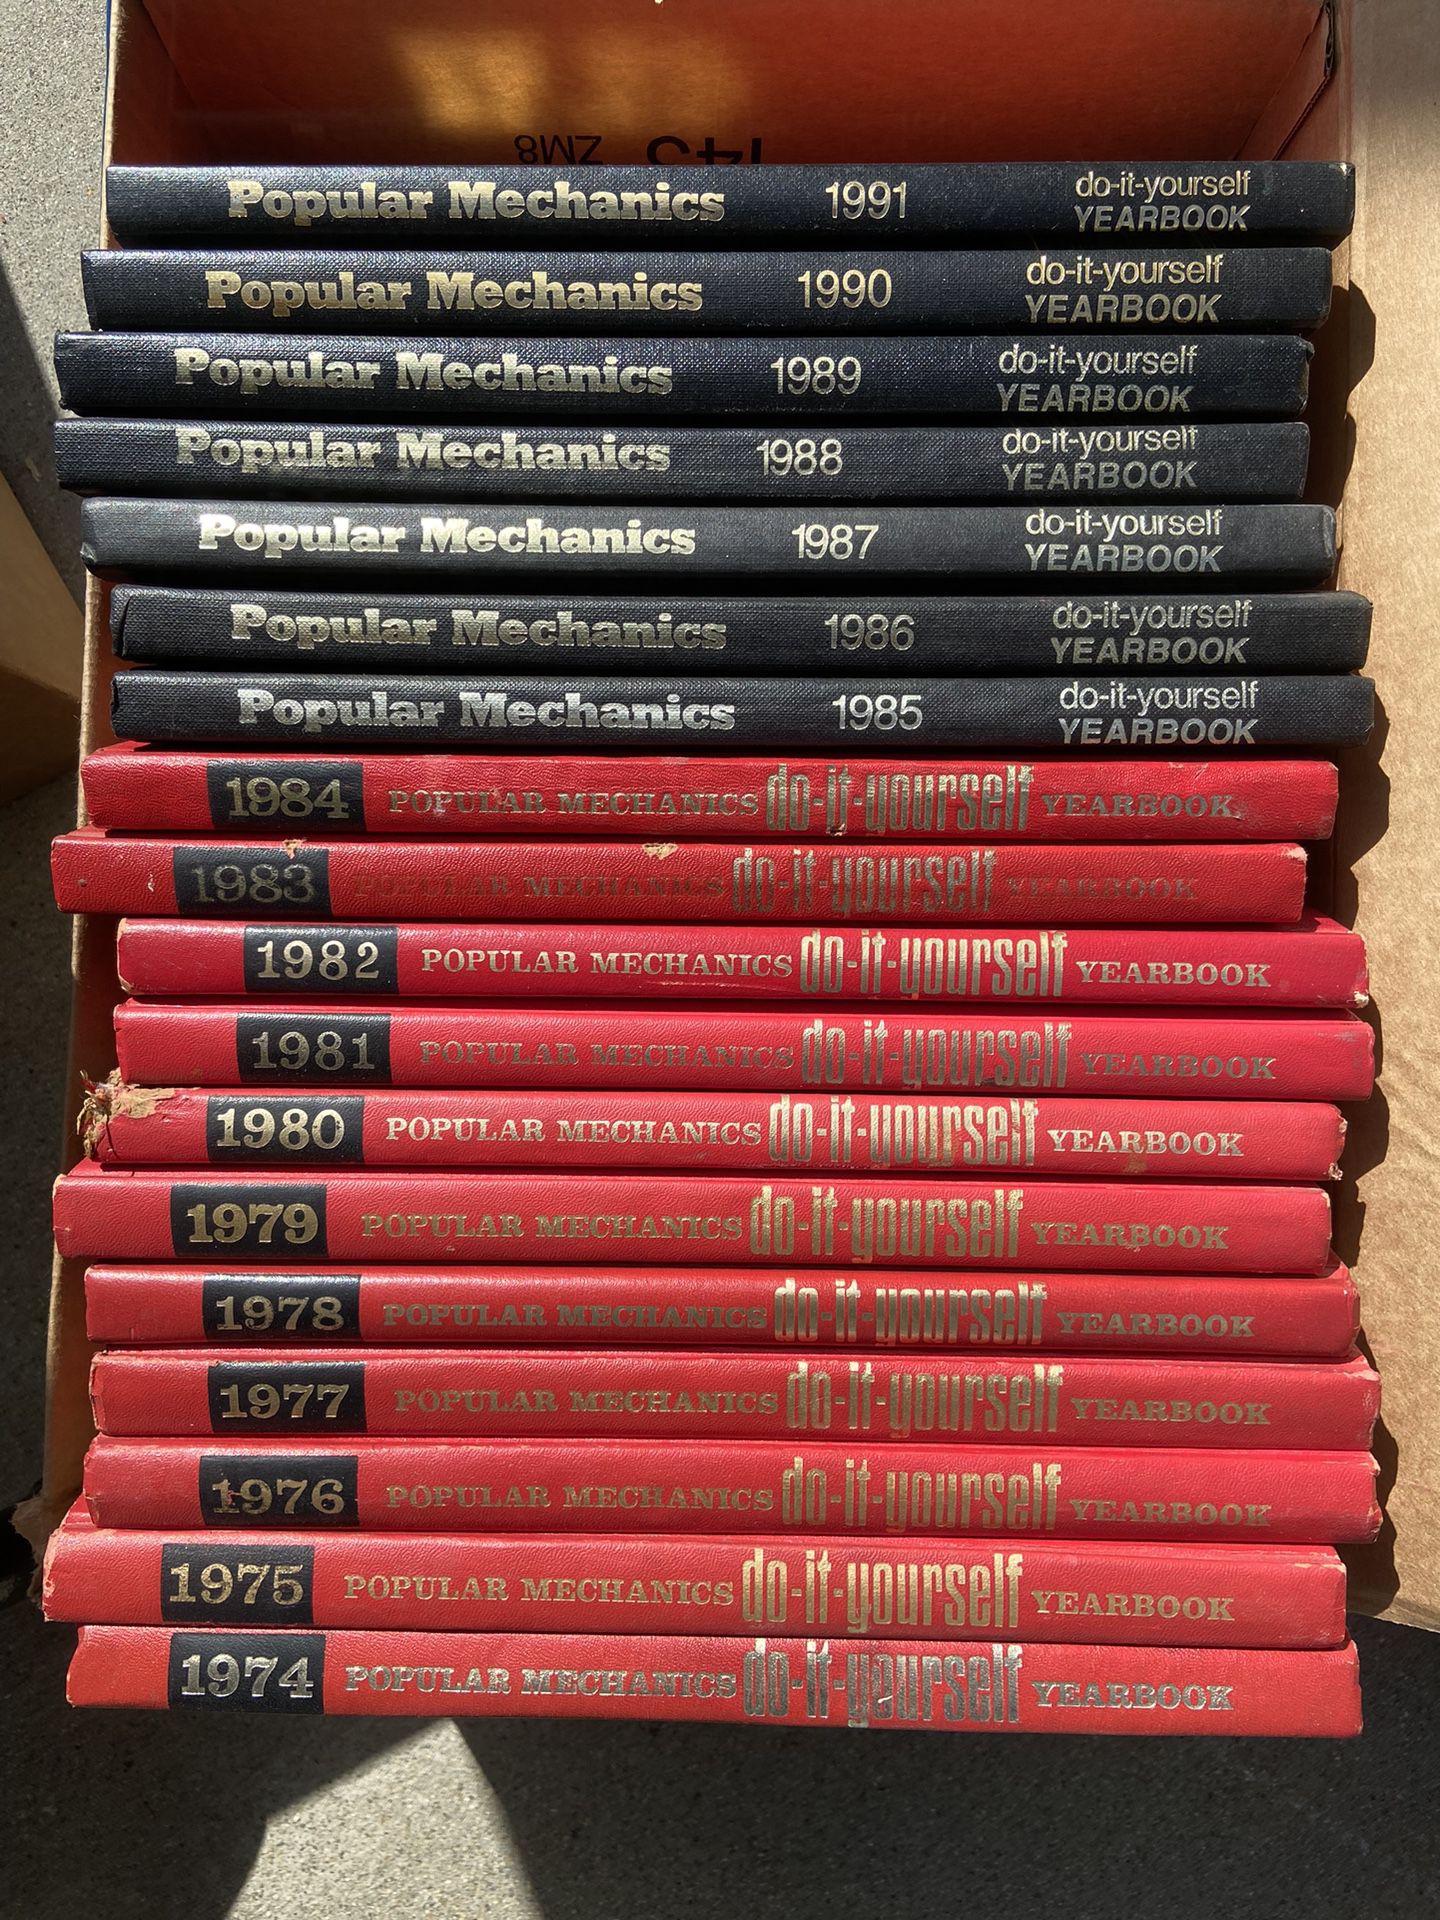 POPULAR MECHANICS Do-It-Yourself Hardback Yearbooks 1974 Thru 1991